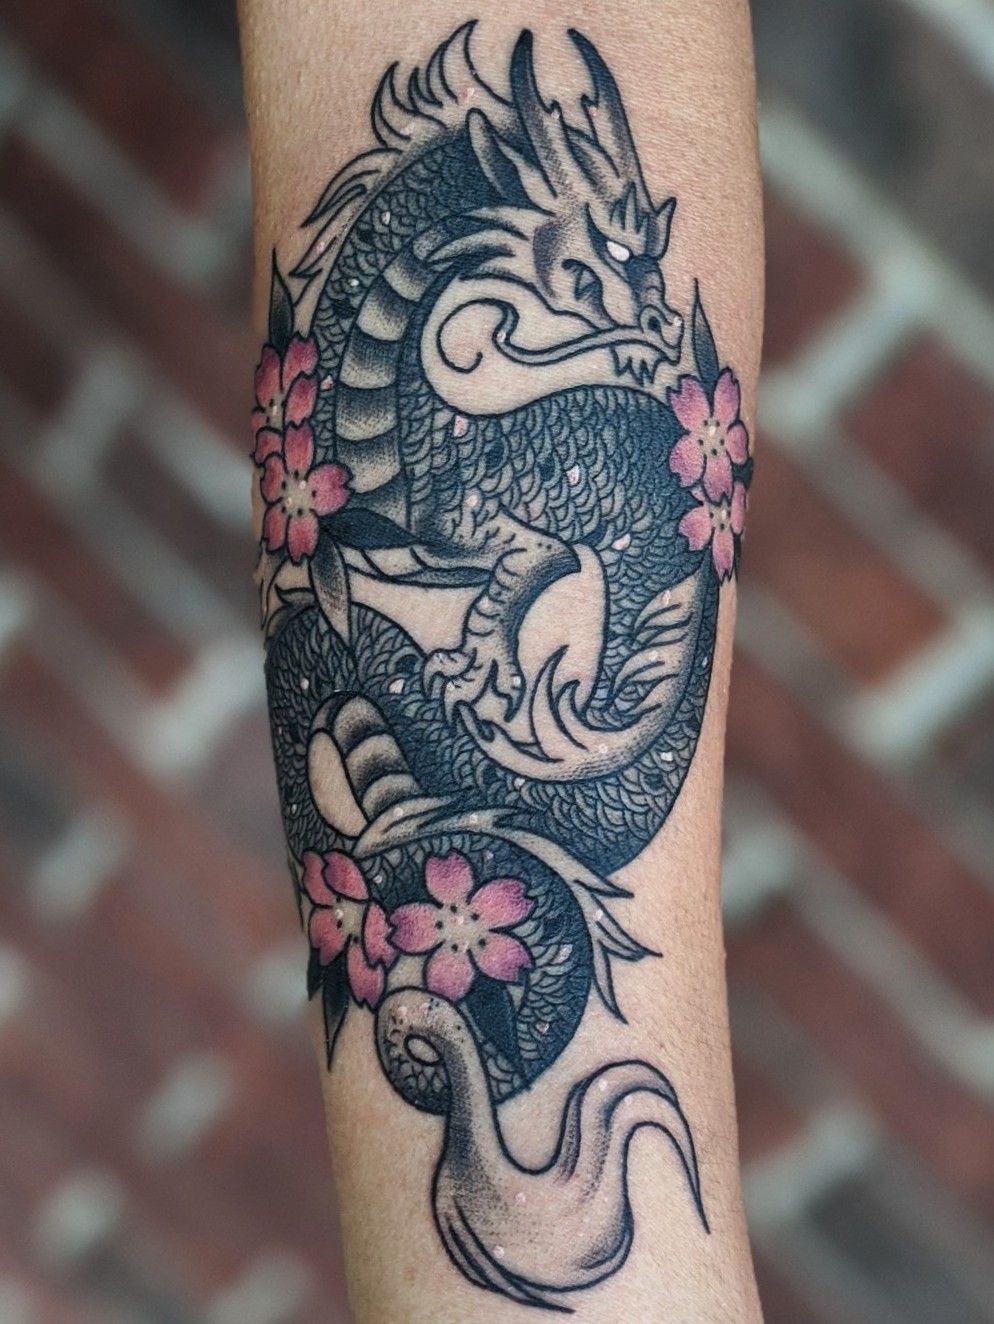 Tattoo uploaded by Marvoy  Dragon tattoo thigh tattoo whipshading   Tattoodo